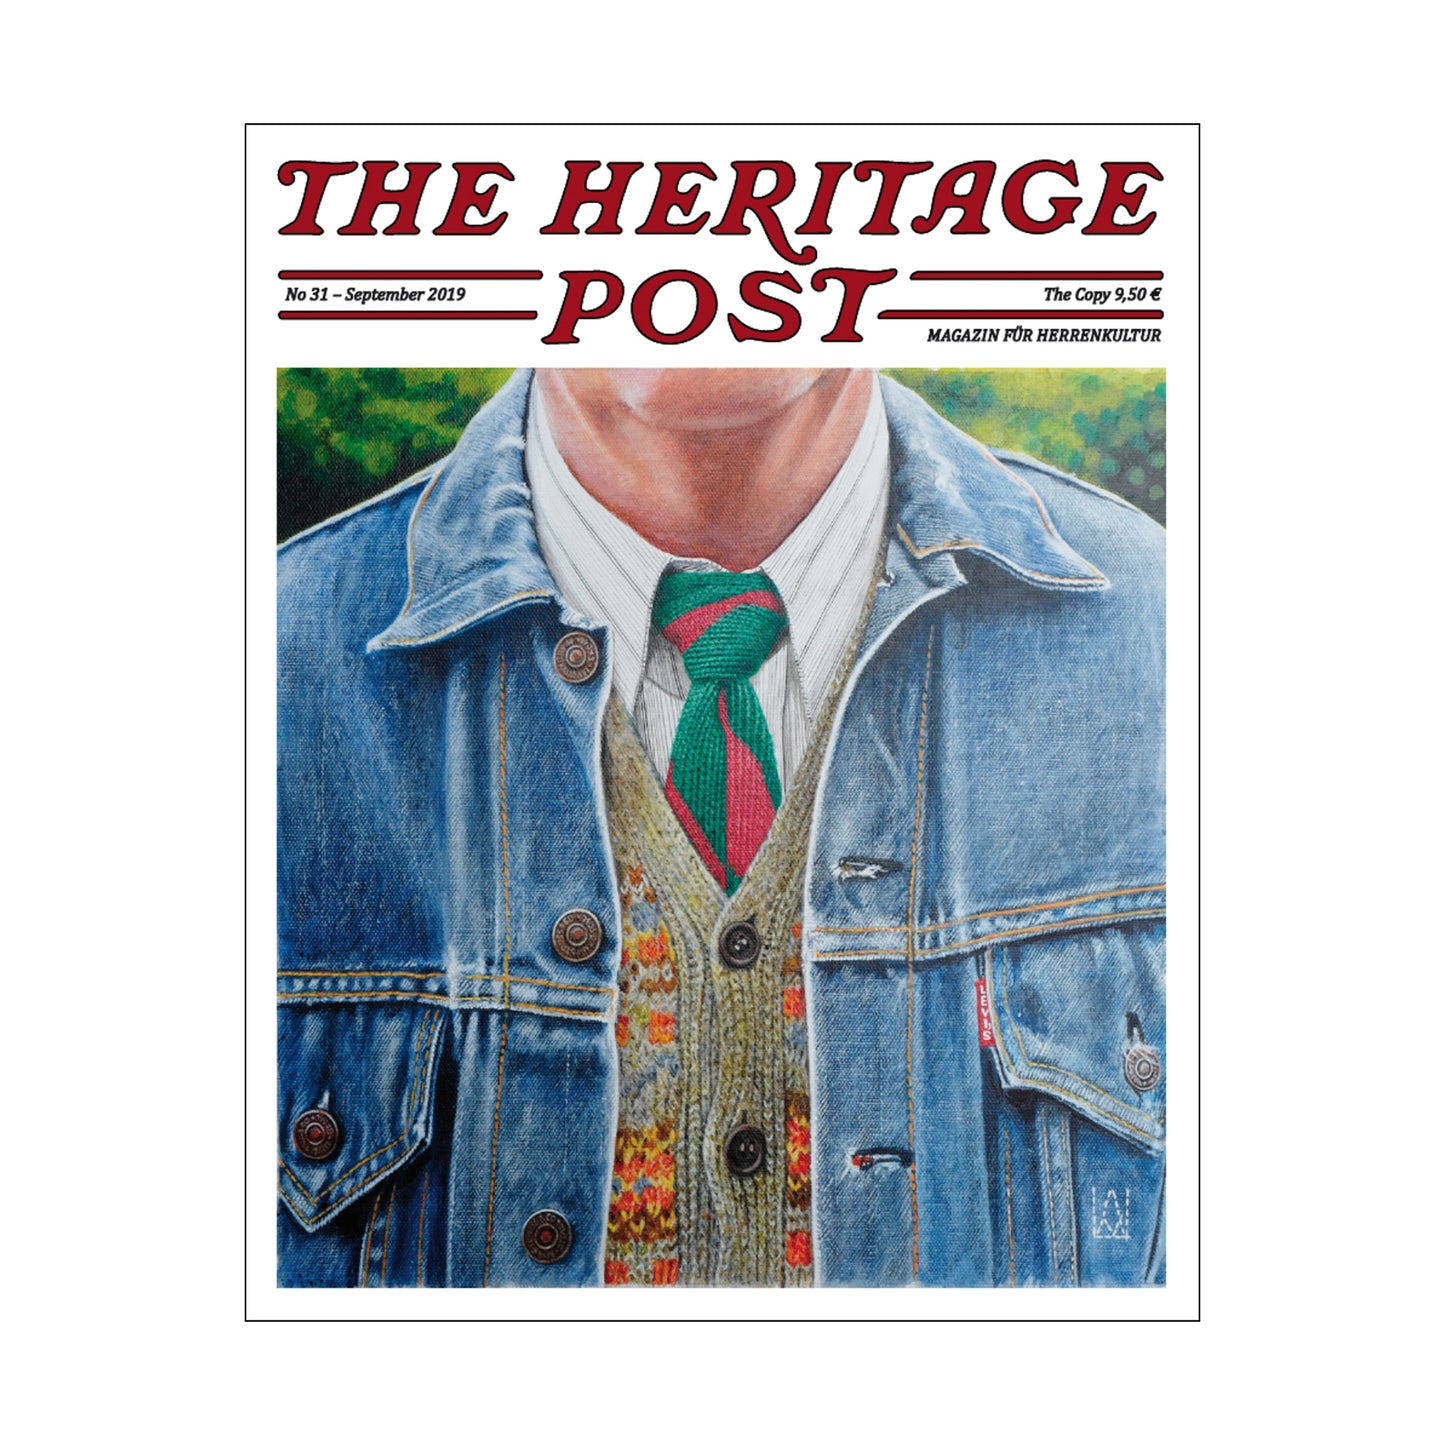 The Heritage Post Magazine No.31